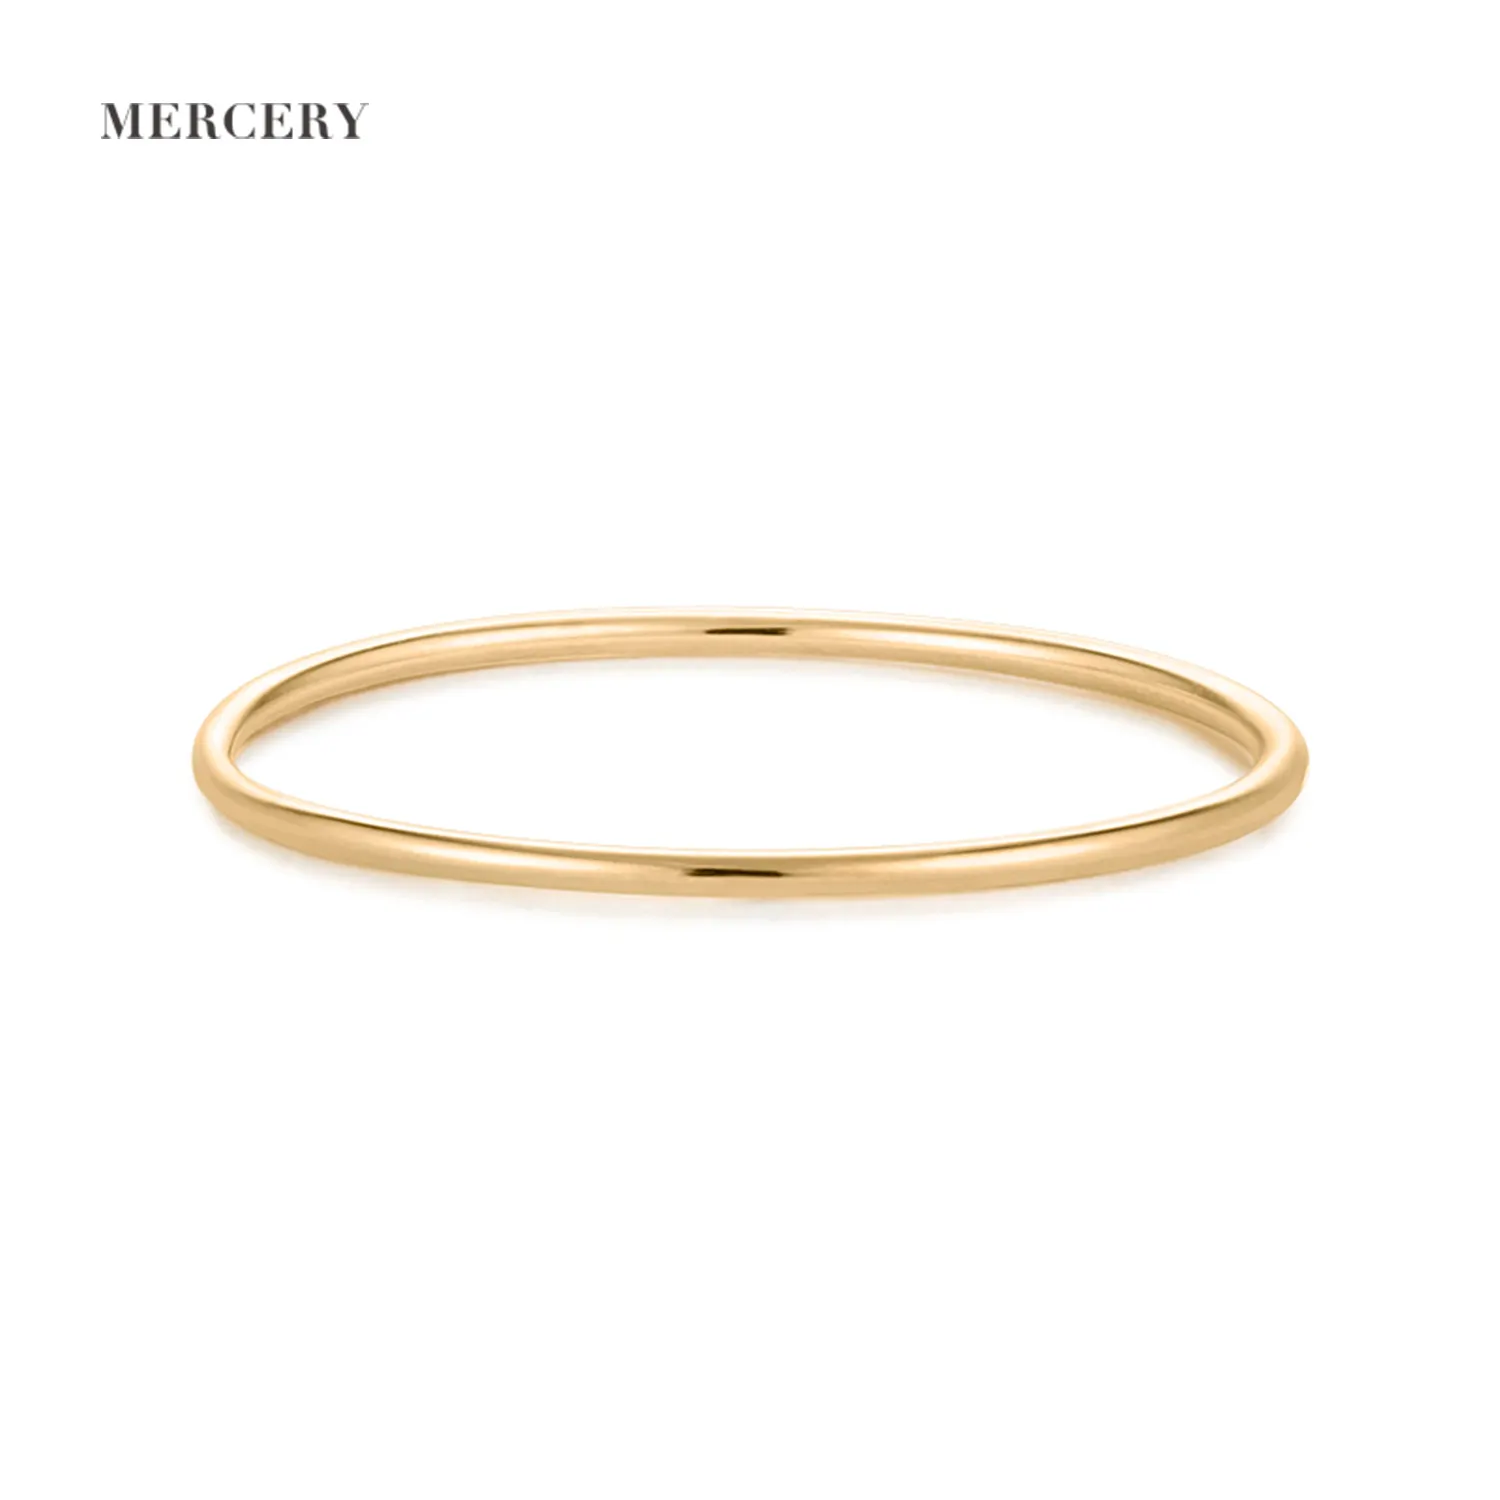 Mercery Jewelry Best Selling Classics Design Eternity Ring Gold Jewelry Women Gift Minimalist Style 14K Gold Ring